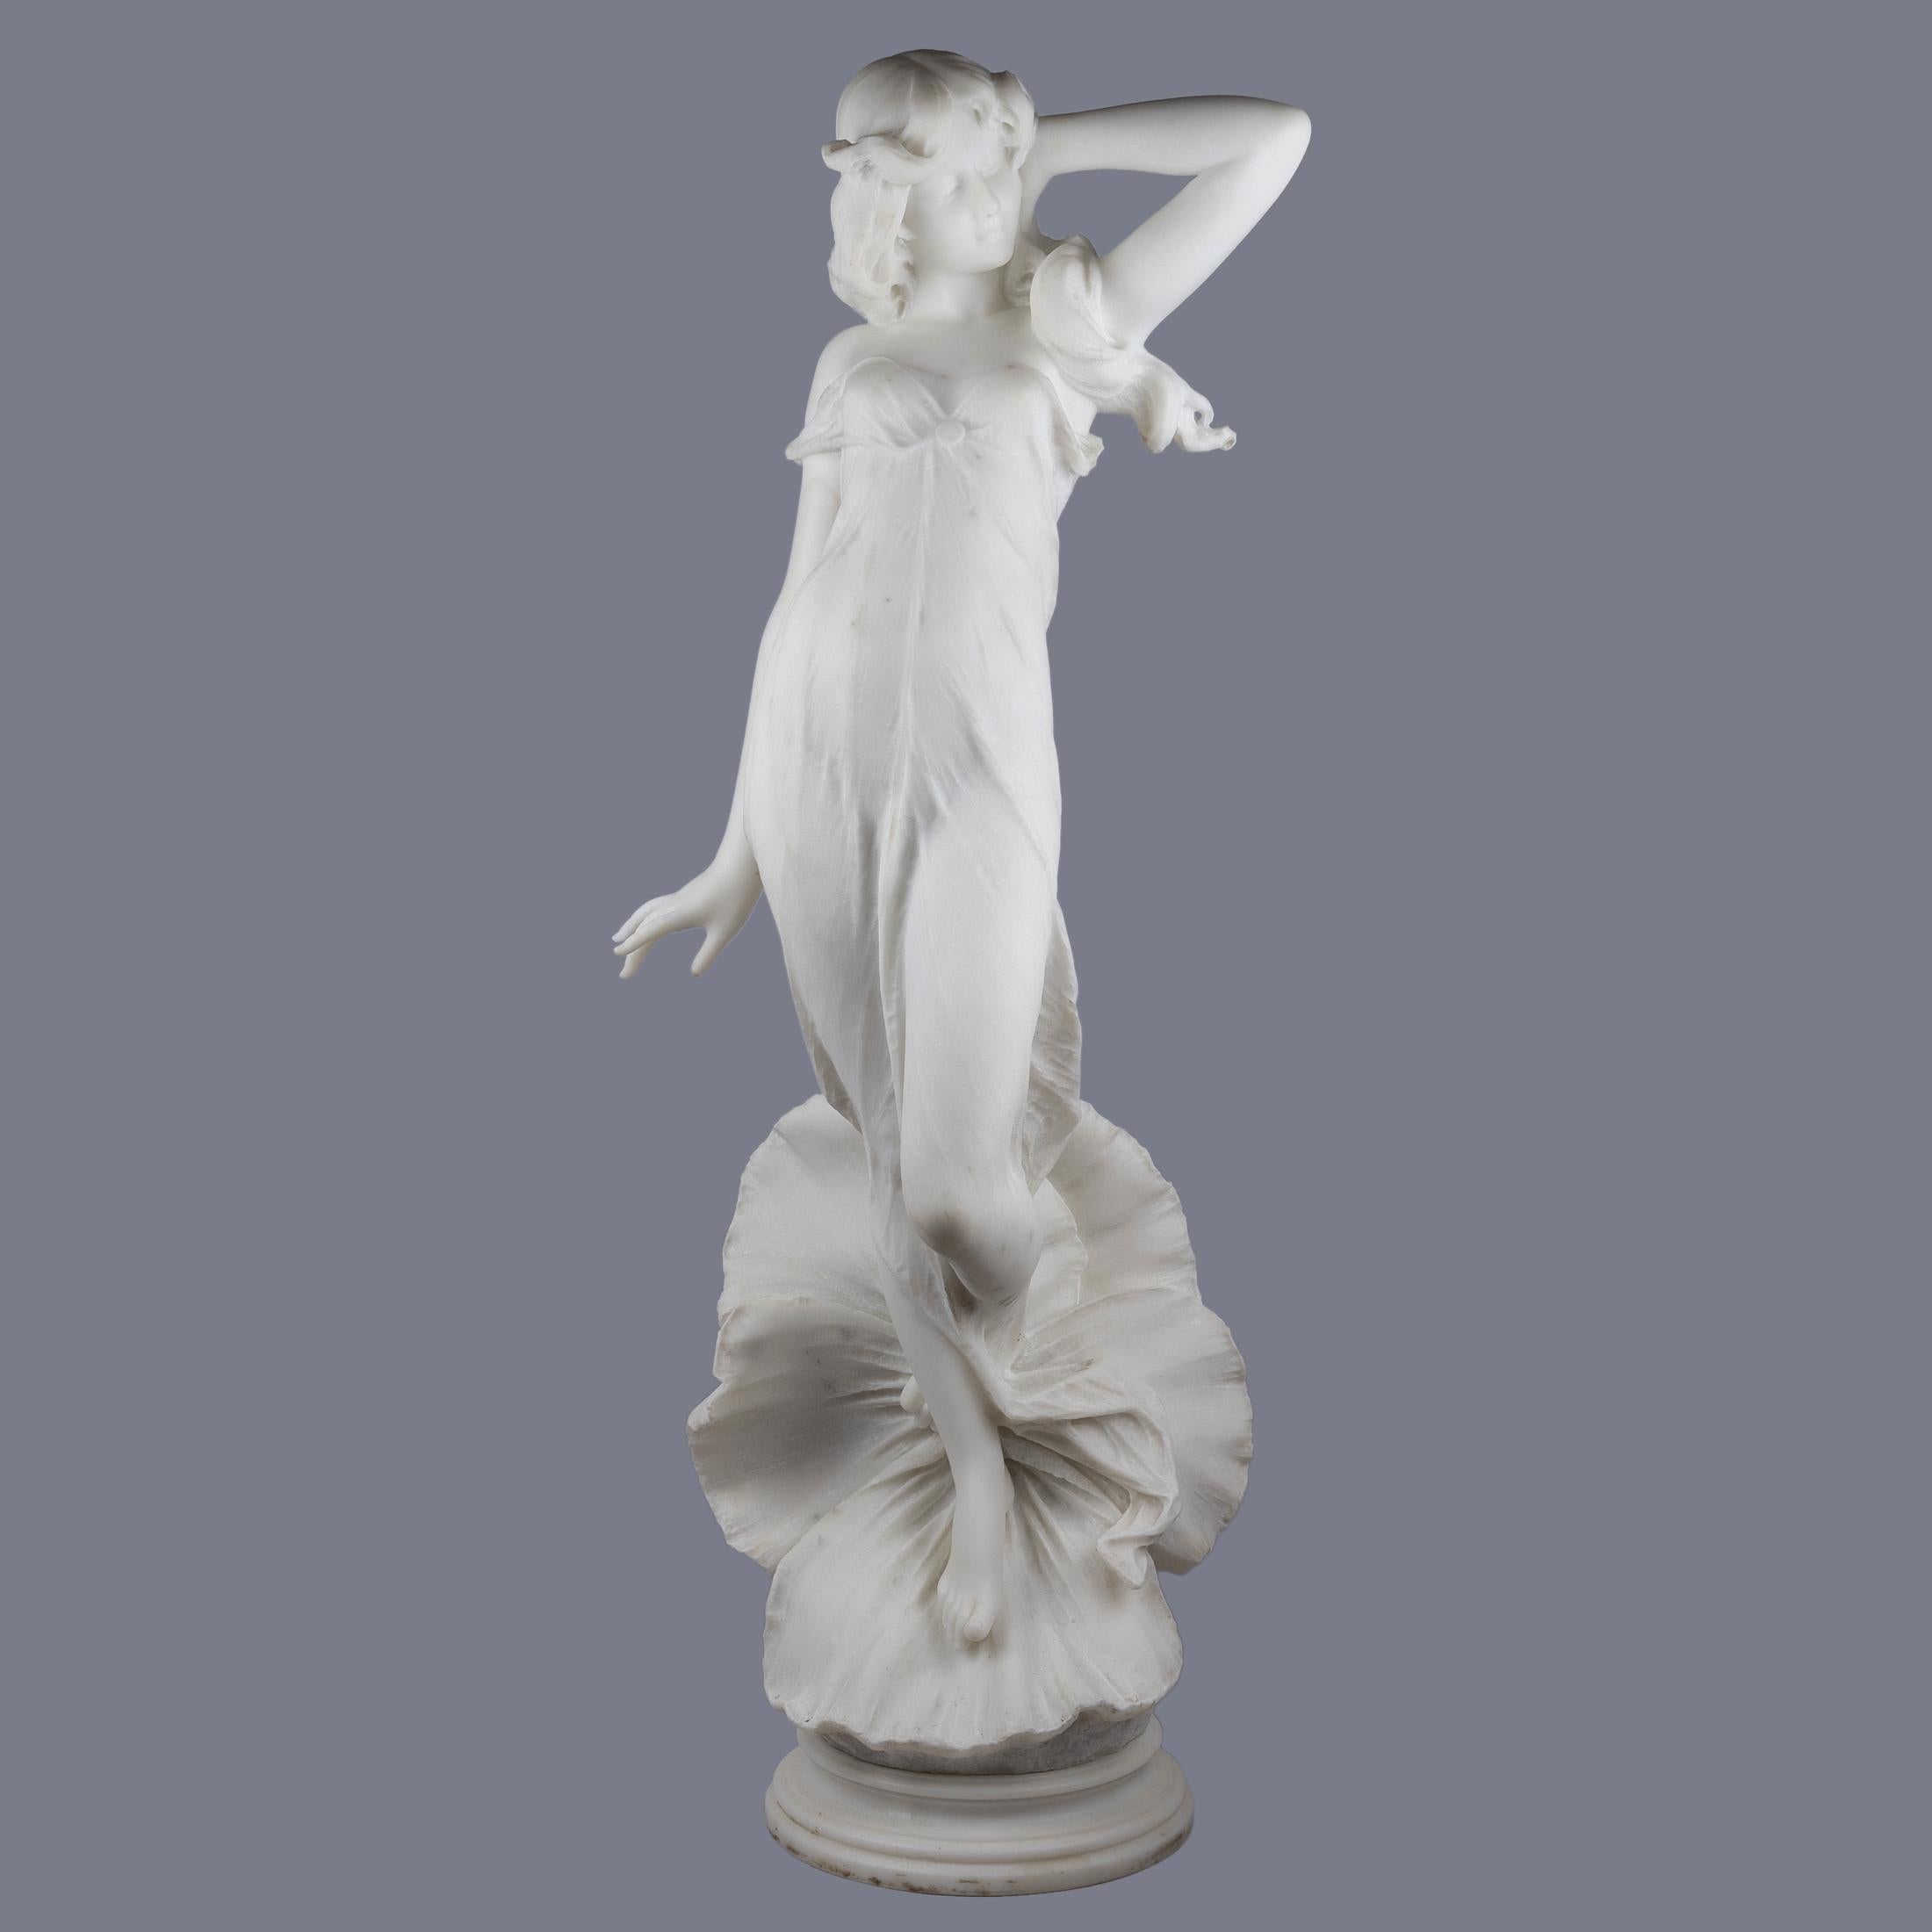 A very desirable Carrara marble sculpture of a female allegorical figure.

Maker: A. Batacchi (XIX-XX)
Origin: Italian
Date: late 19th century
Signed A. Batacchi; Florence
Size: 35 in high.